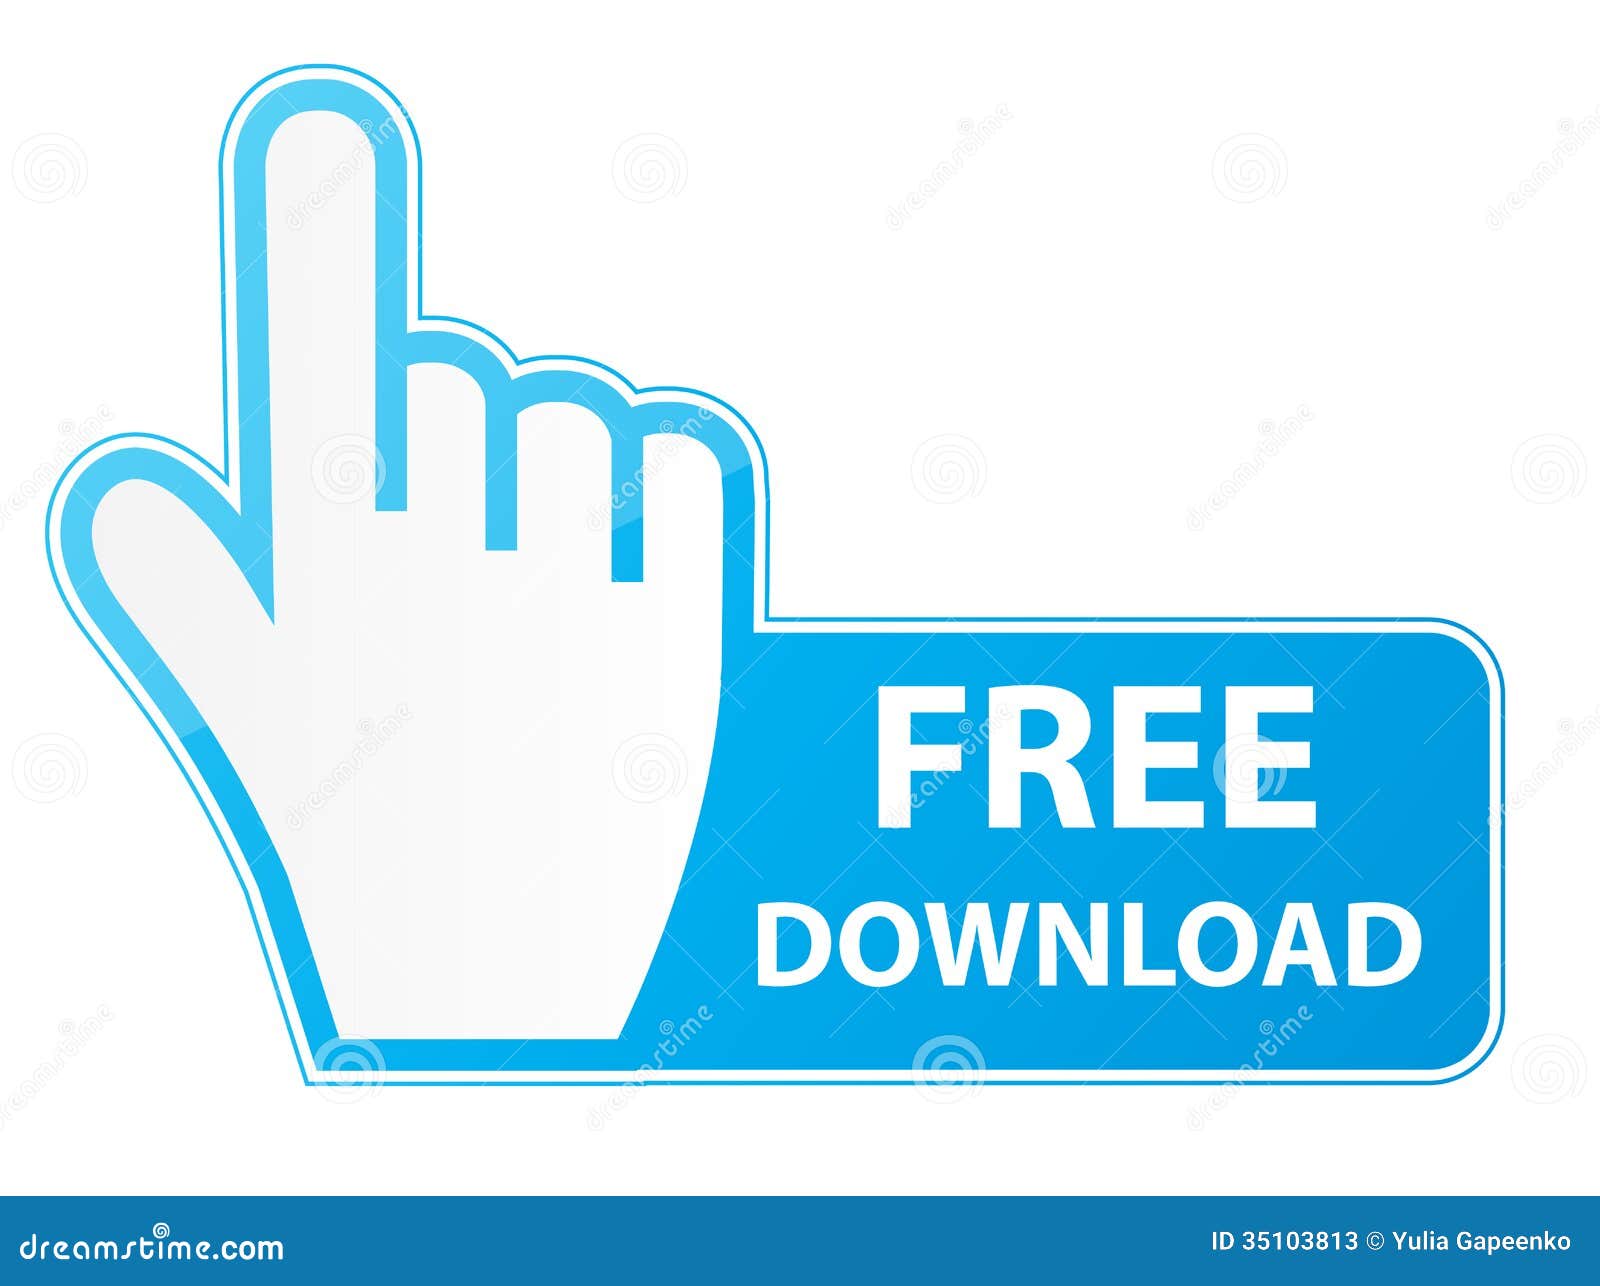 AutoCAD Crack   License Key Free Download [2022]